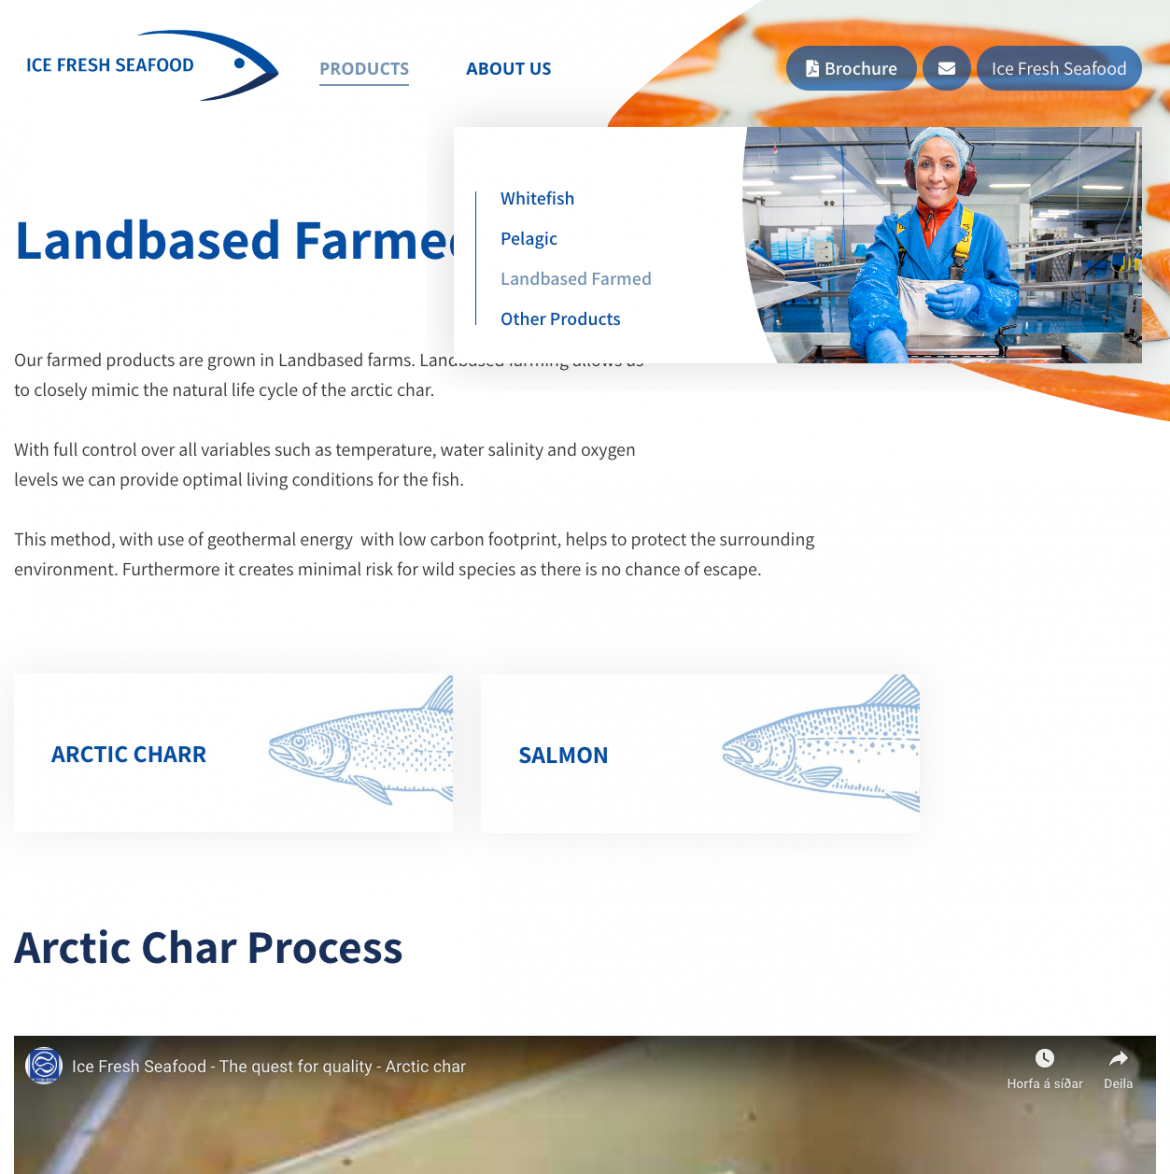 landbased-farmed-menu-ice-fresh-seafood-wwwicefreshis.png